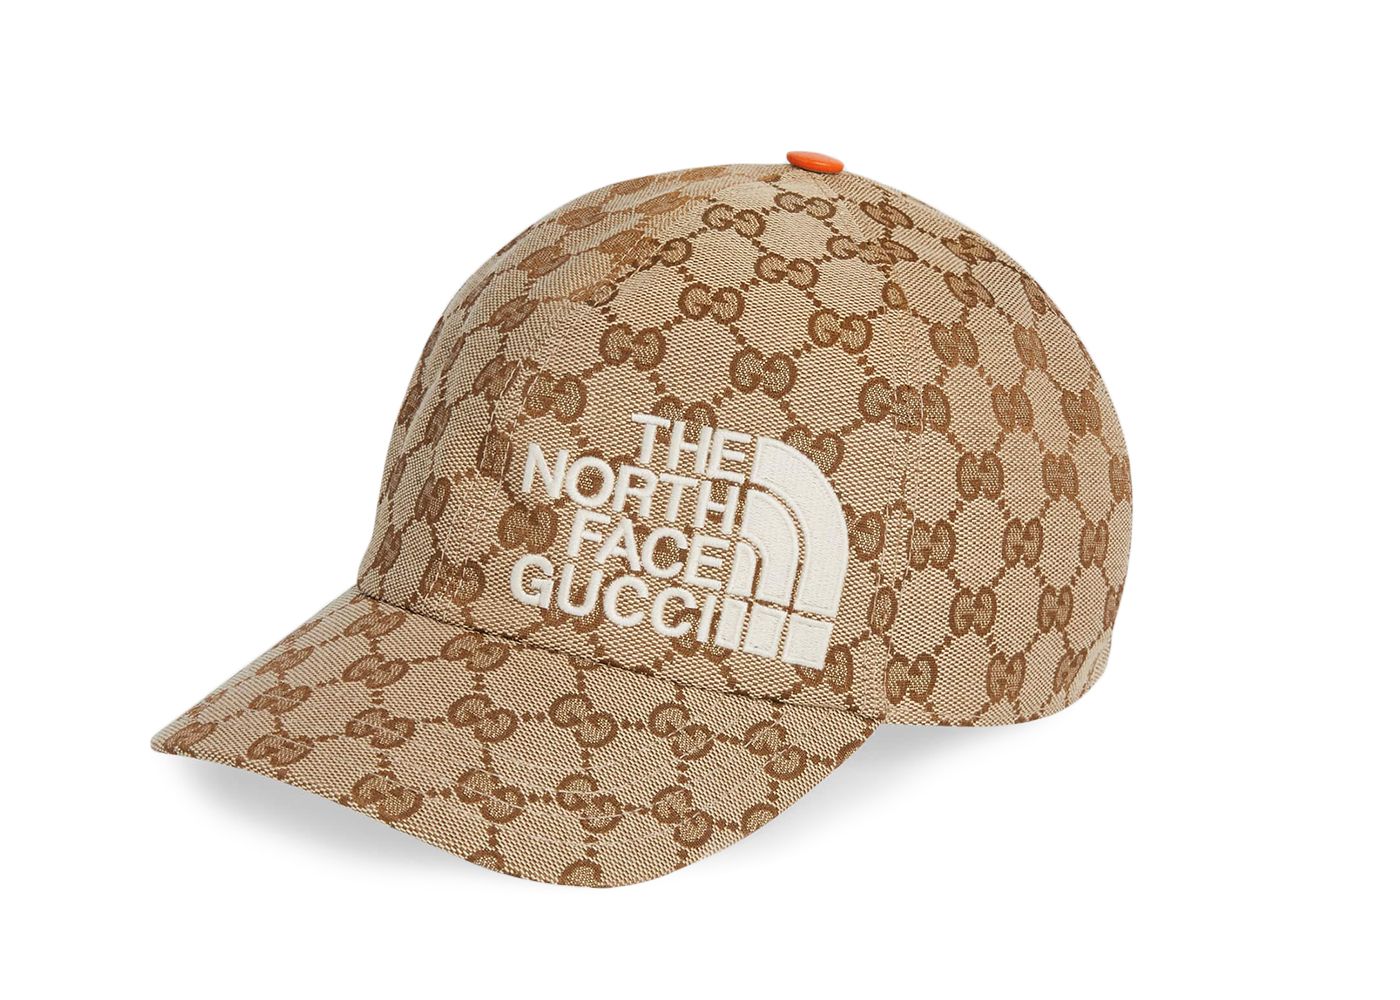 Gucci x The North Face Original GG Canvas with Web Baseball Cap Beige Ebony | StockX